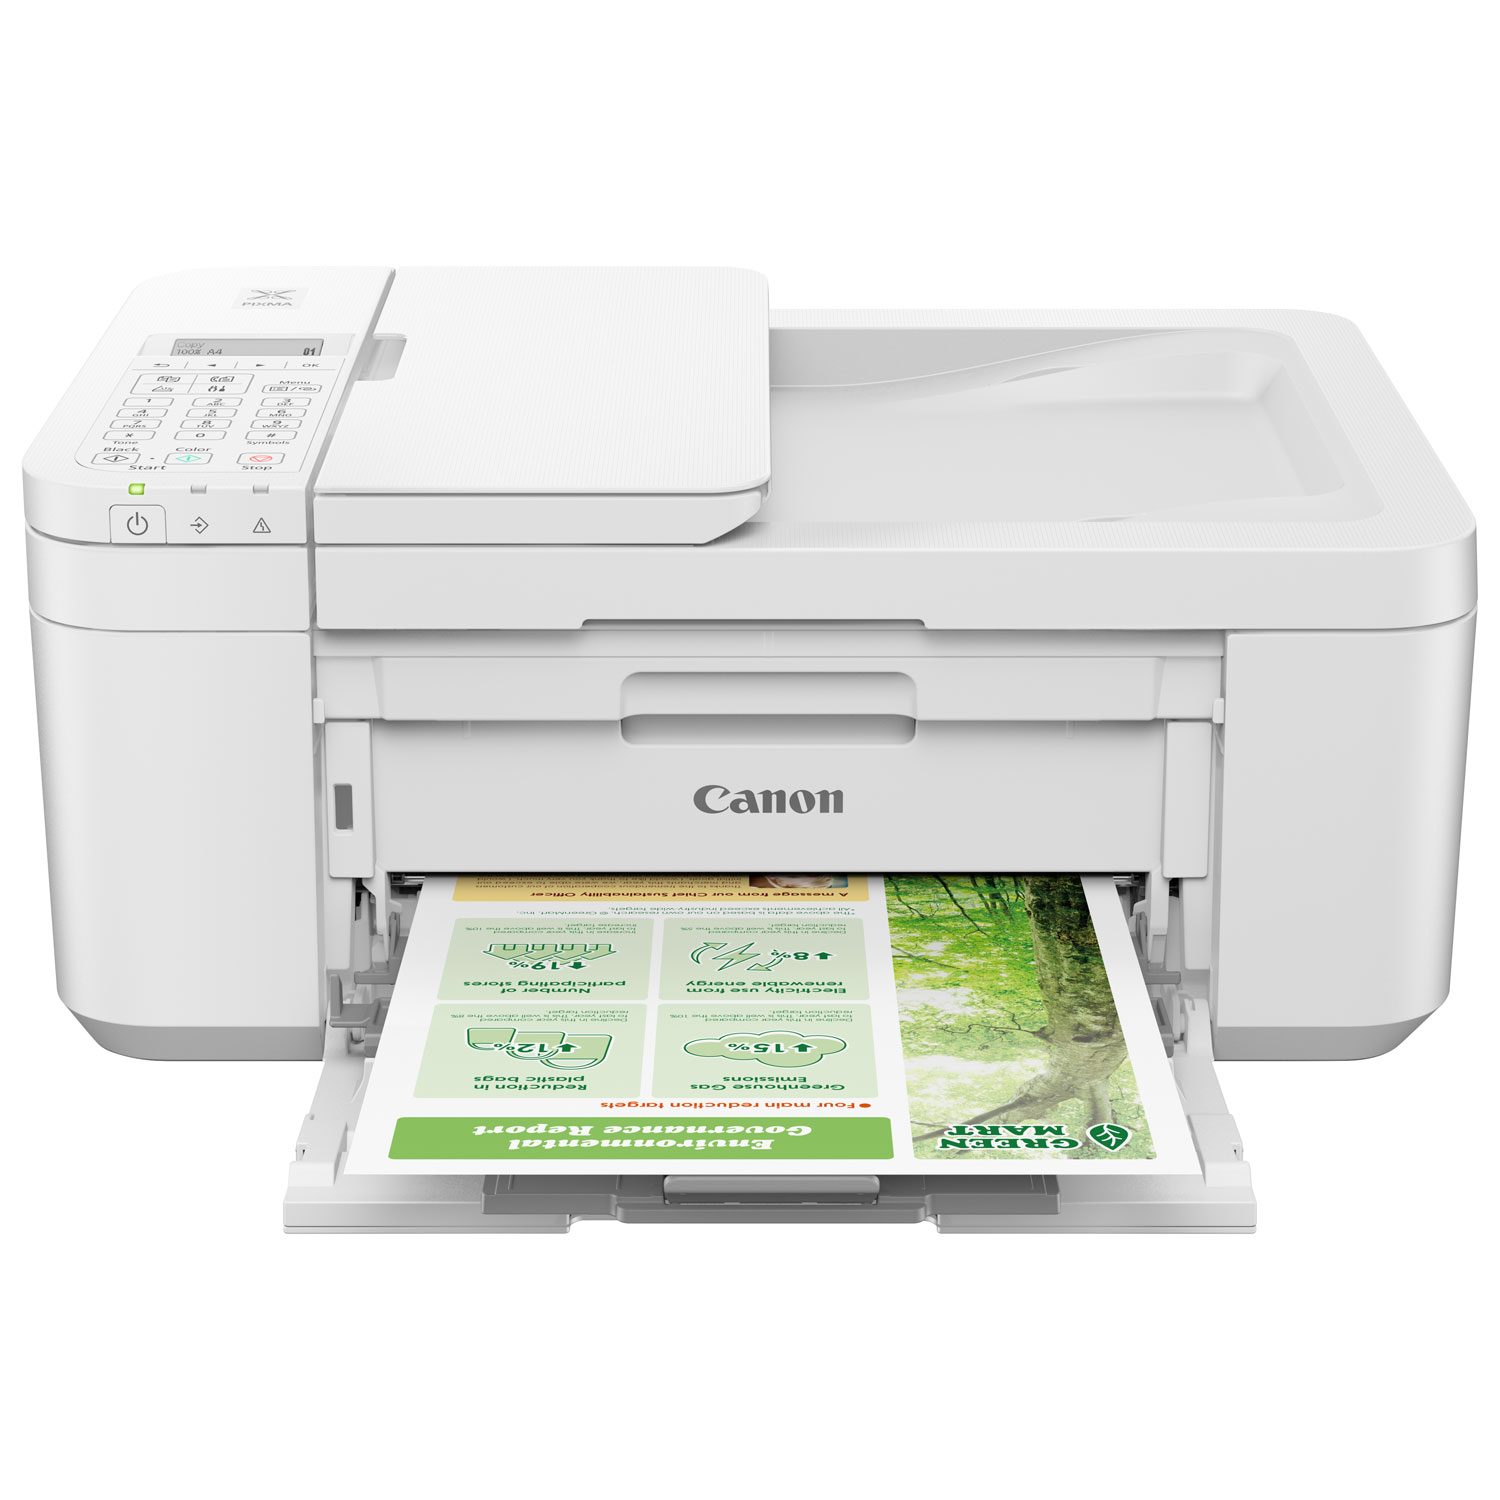 Canon PIXMA TR4720 Wireless All-In-One Inkjet Printer - White